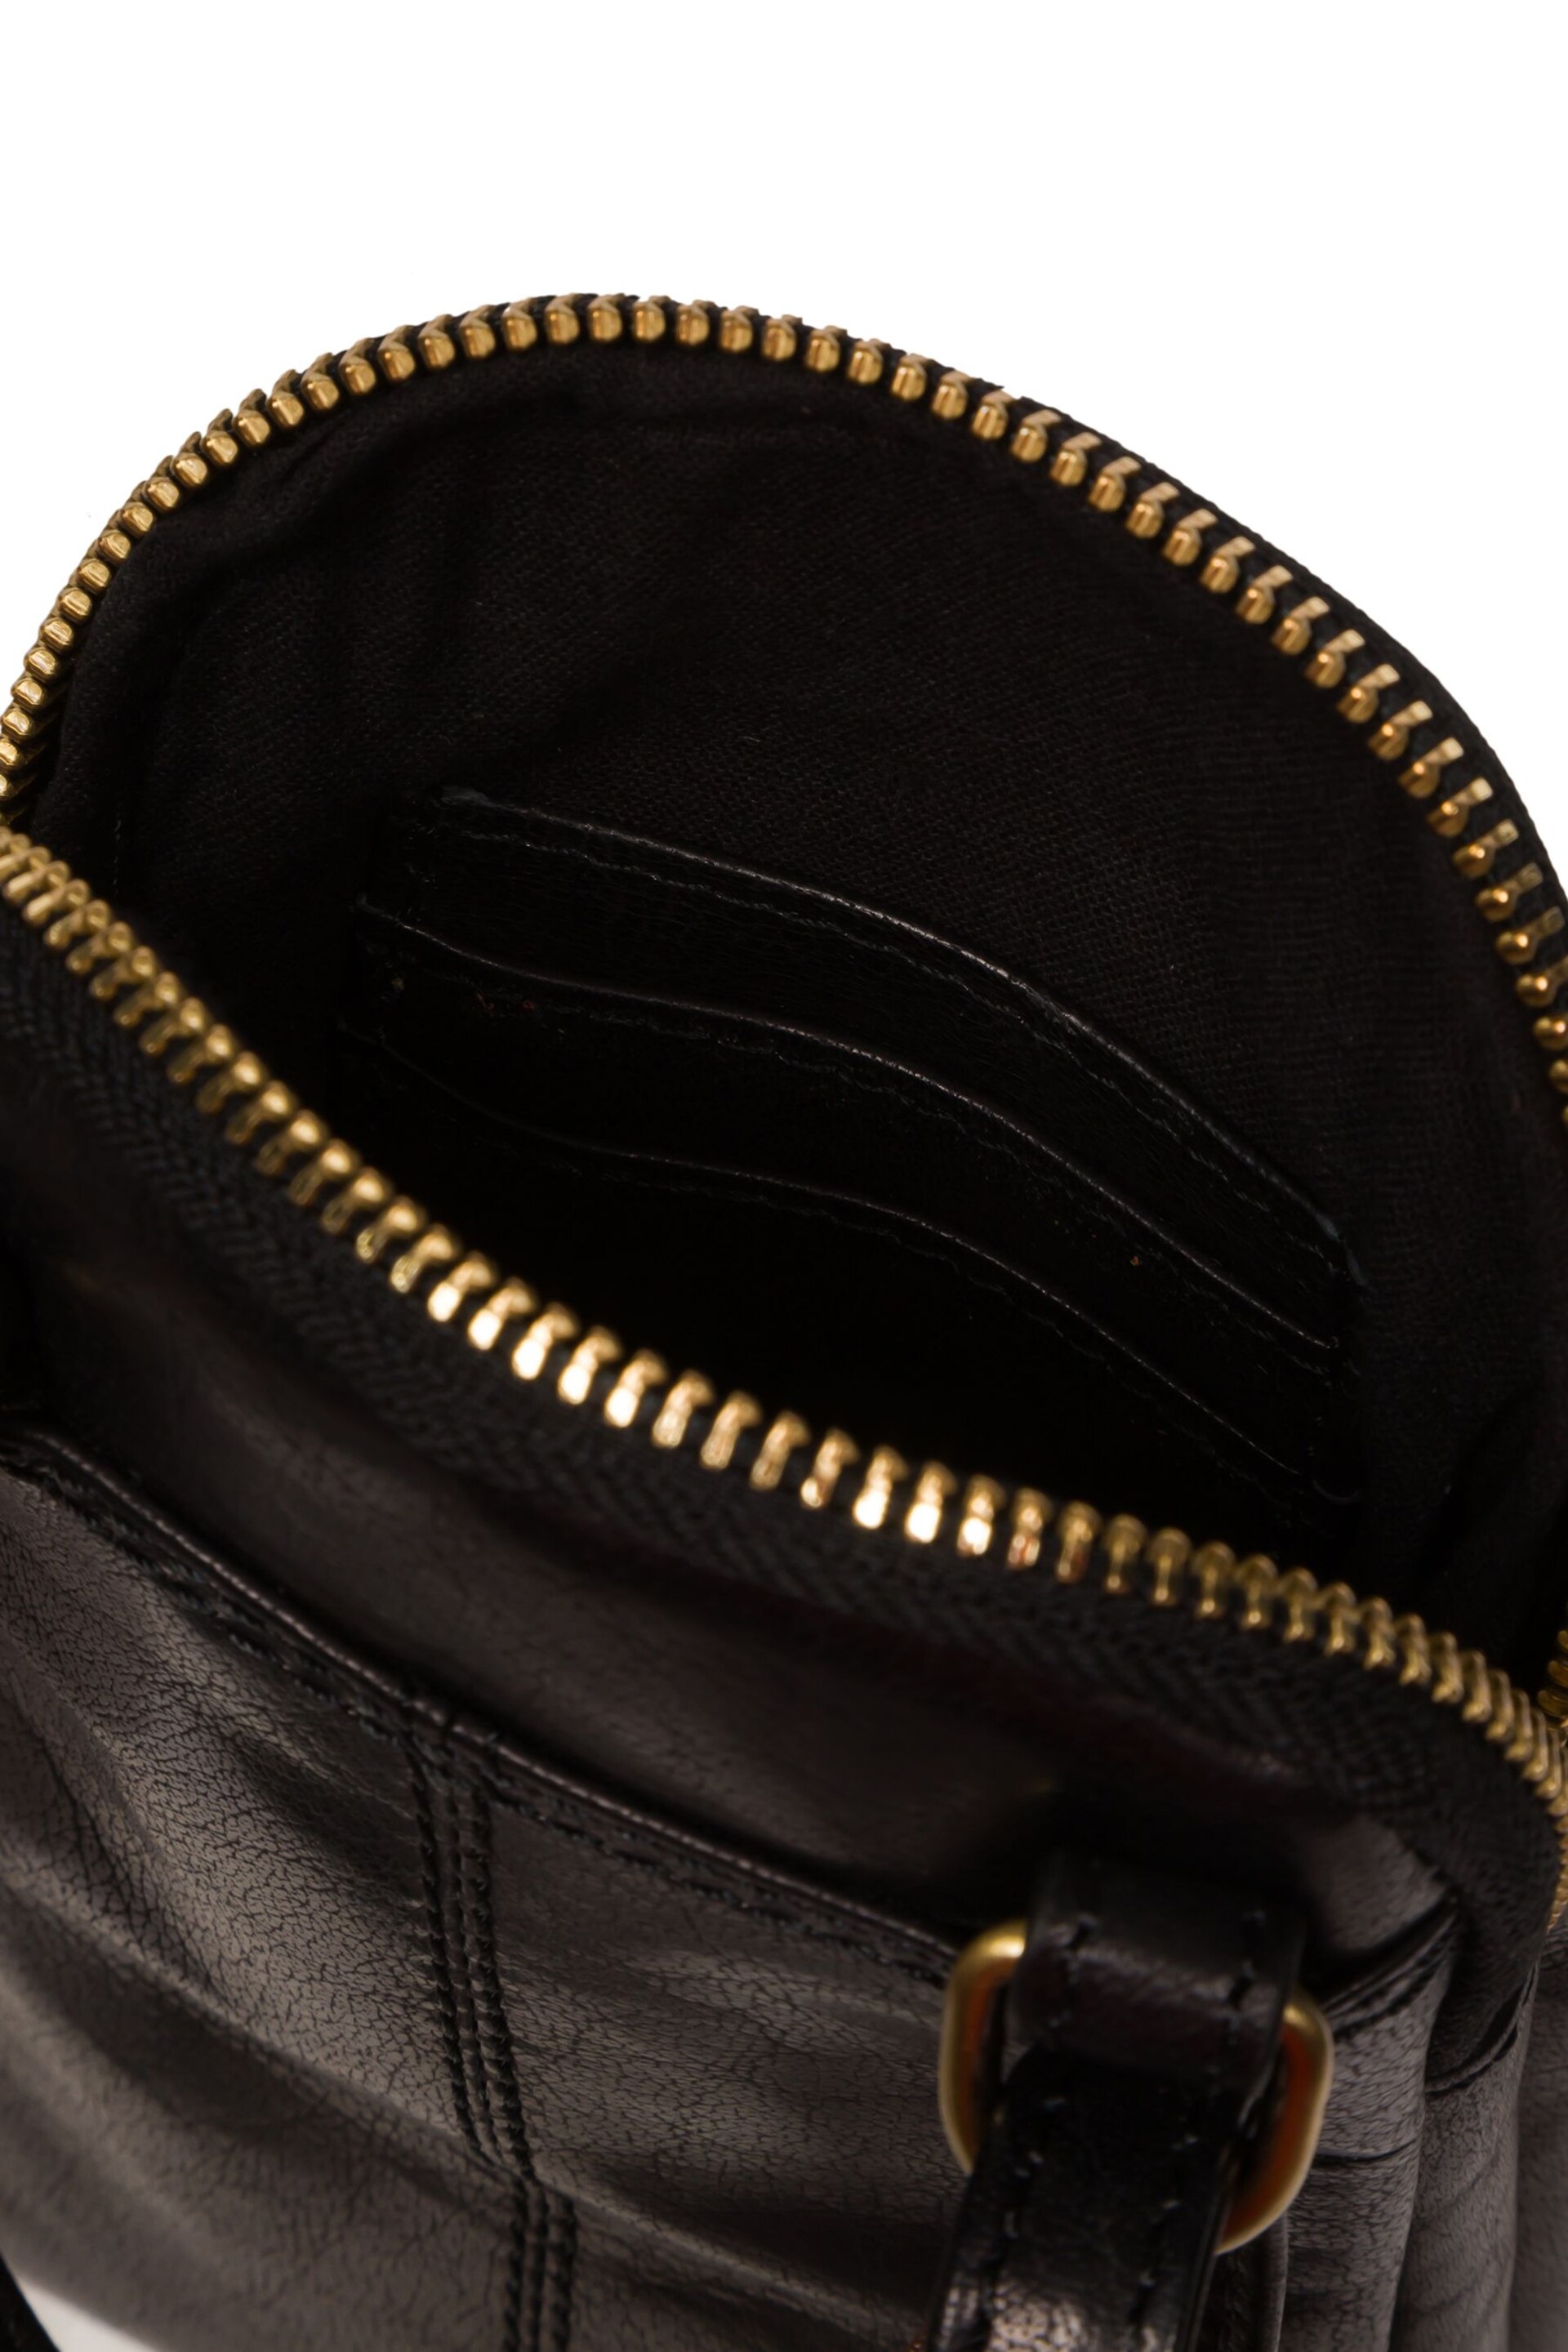 Conkca 'Leia' Leather Cross-Body Phone Bag - Image 7 of 8